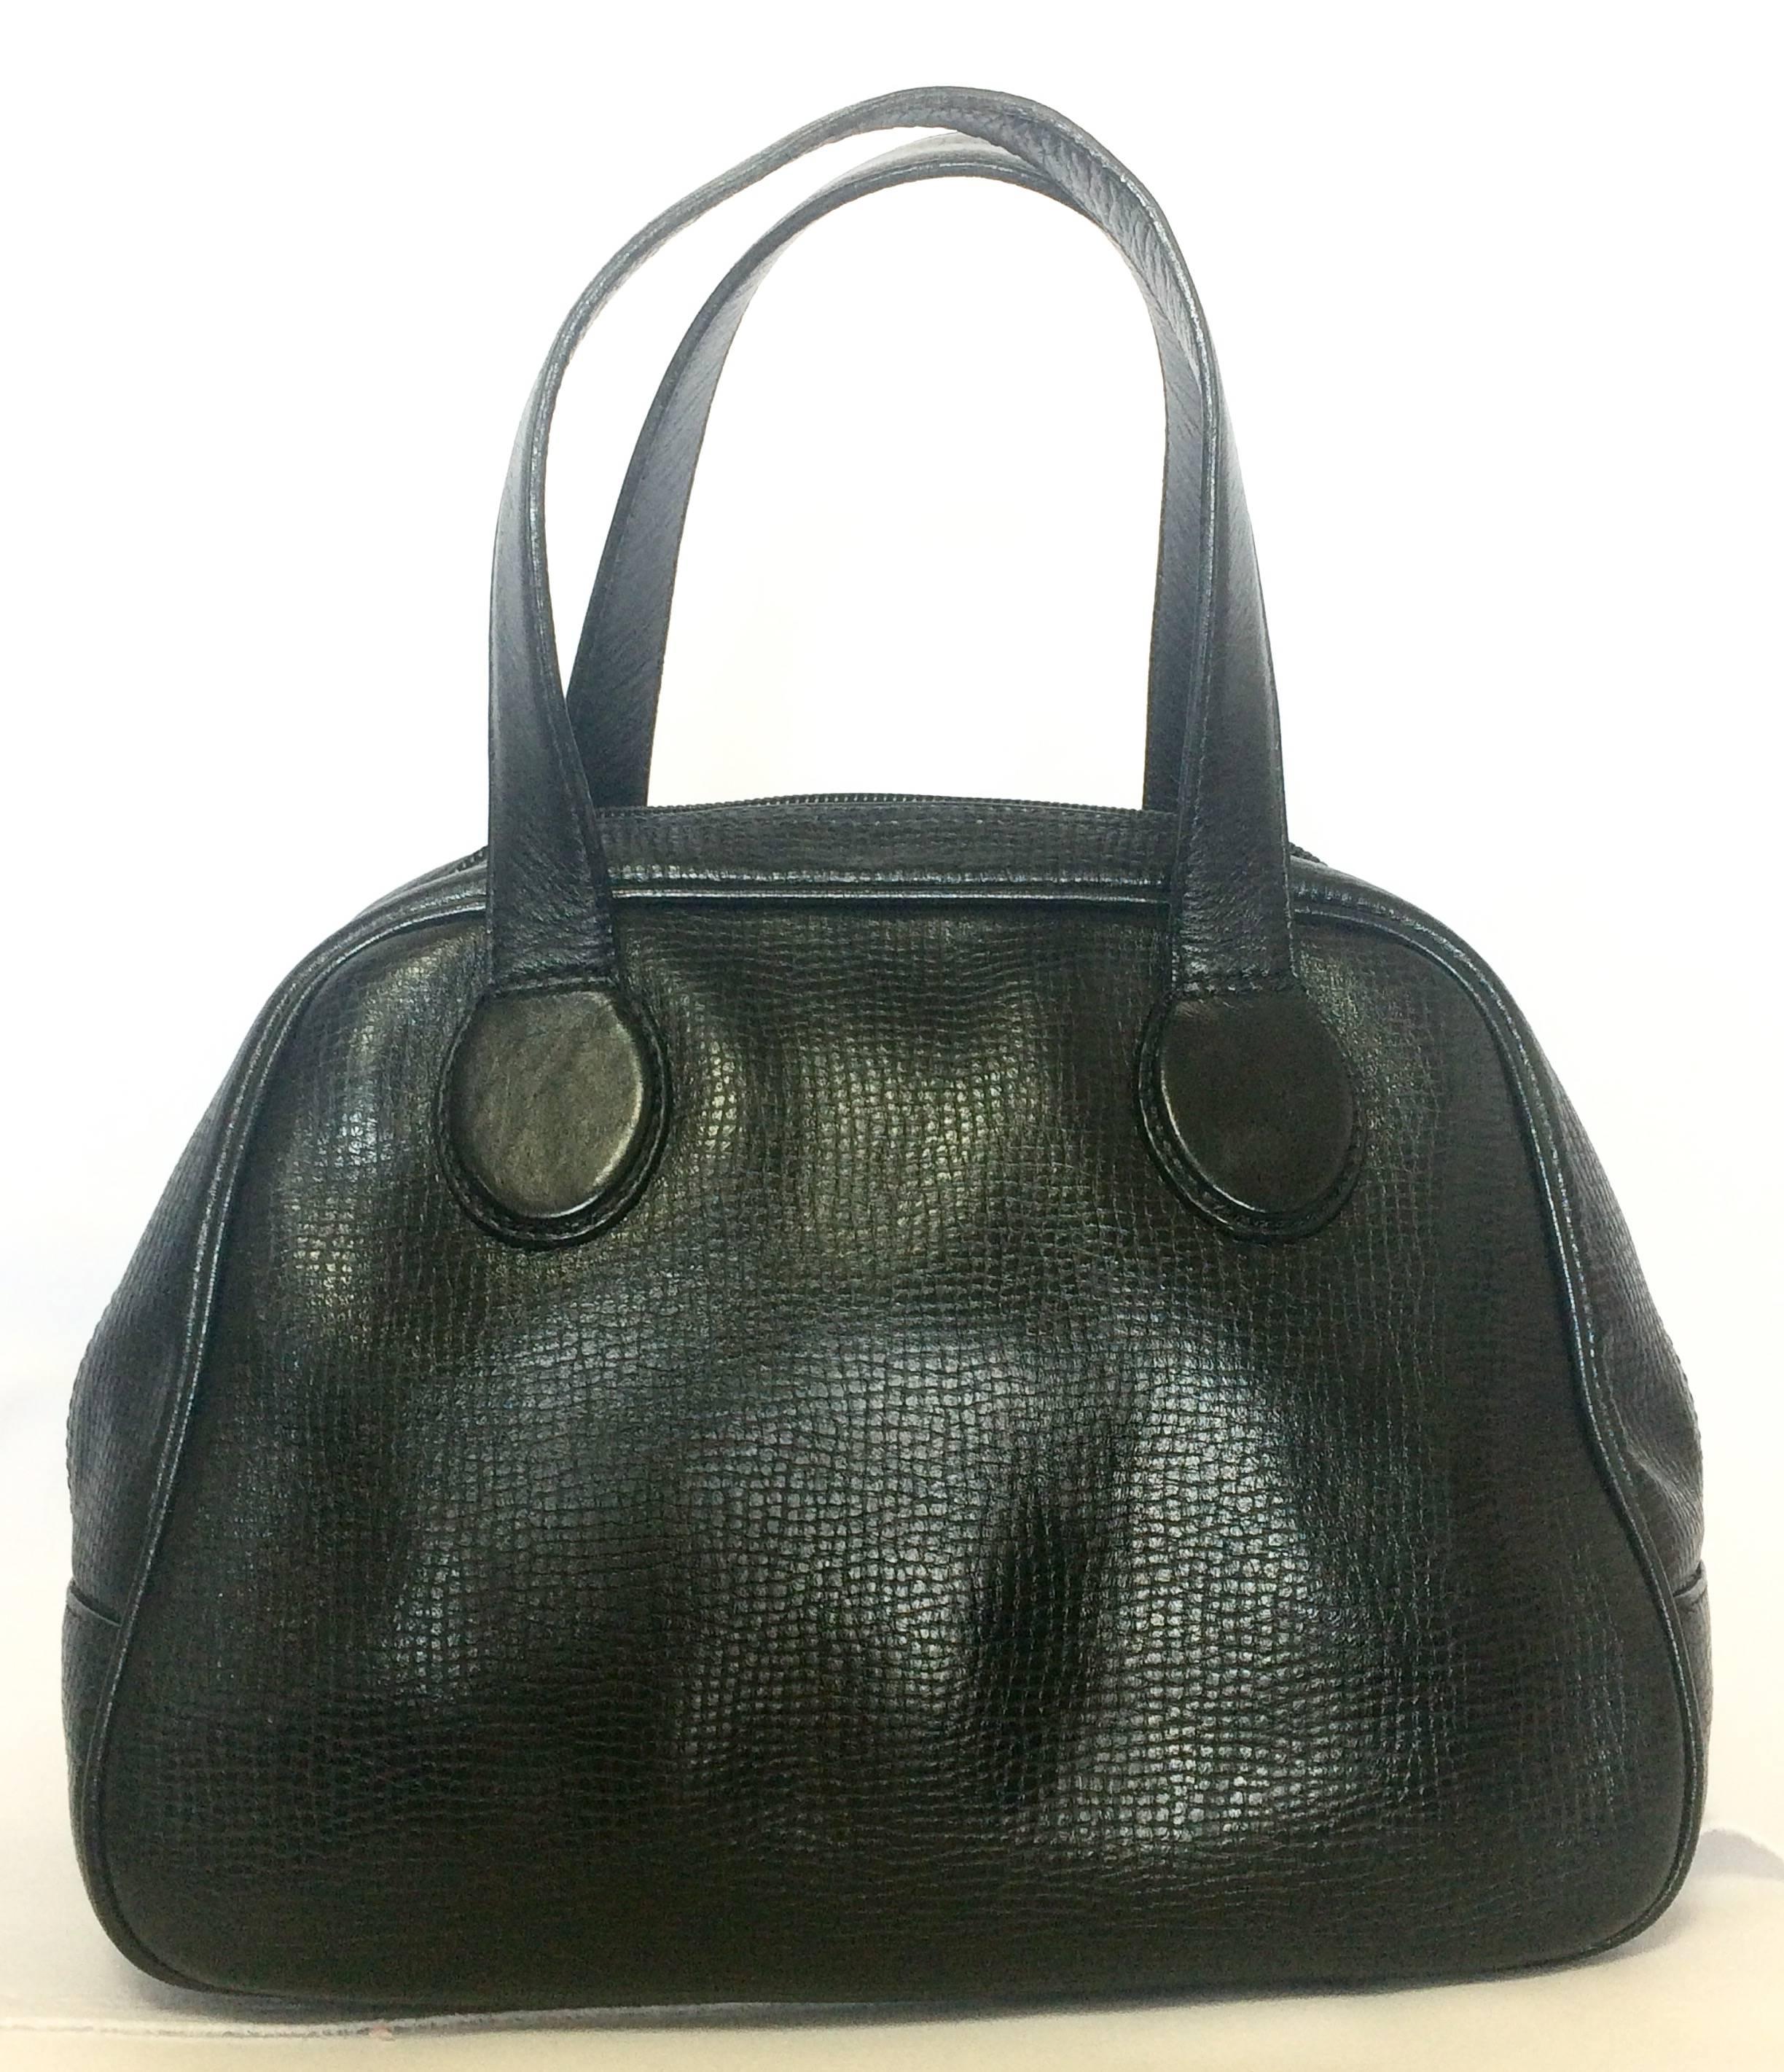 Black Vintage Christian Dior black leather mini bolide style handbag with logo motif.